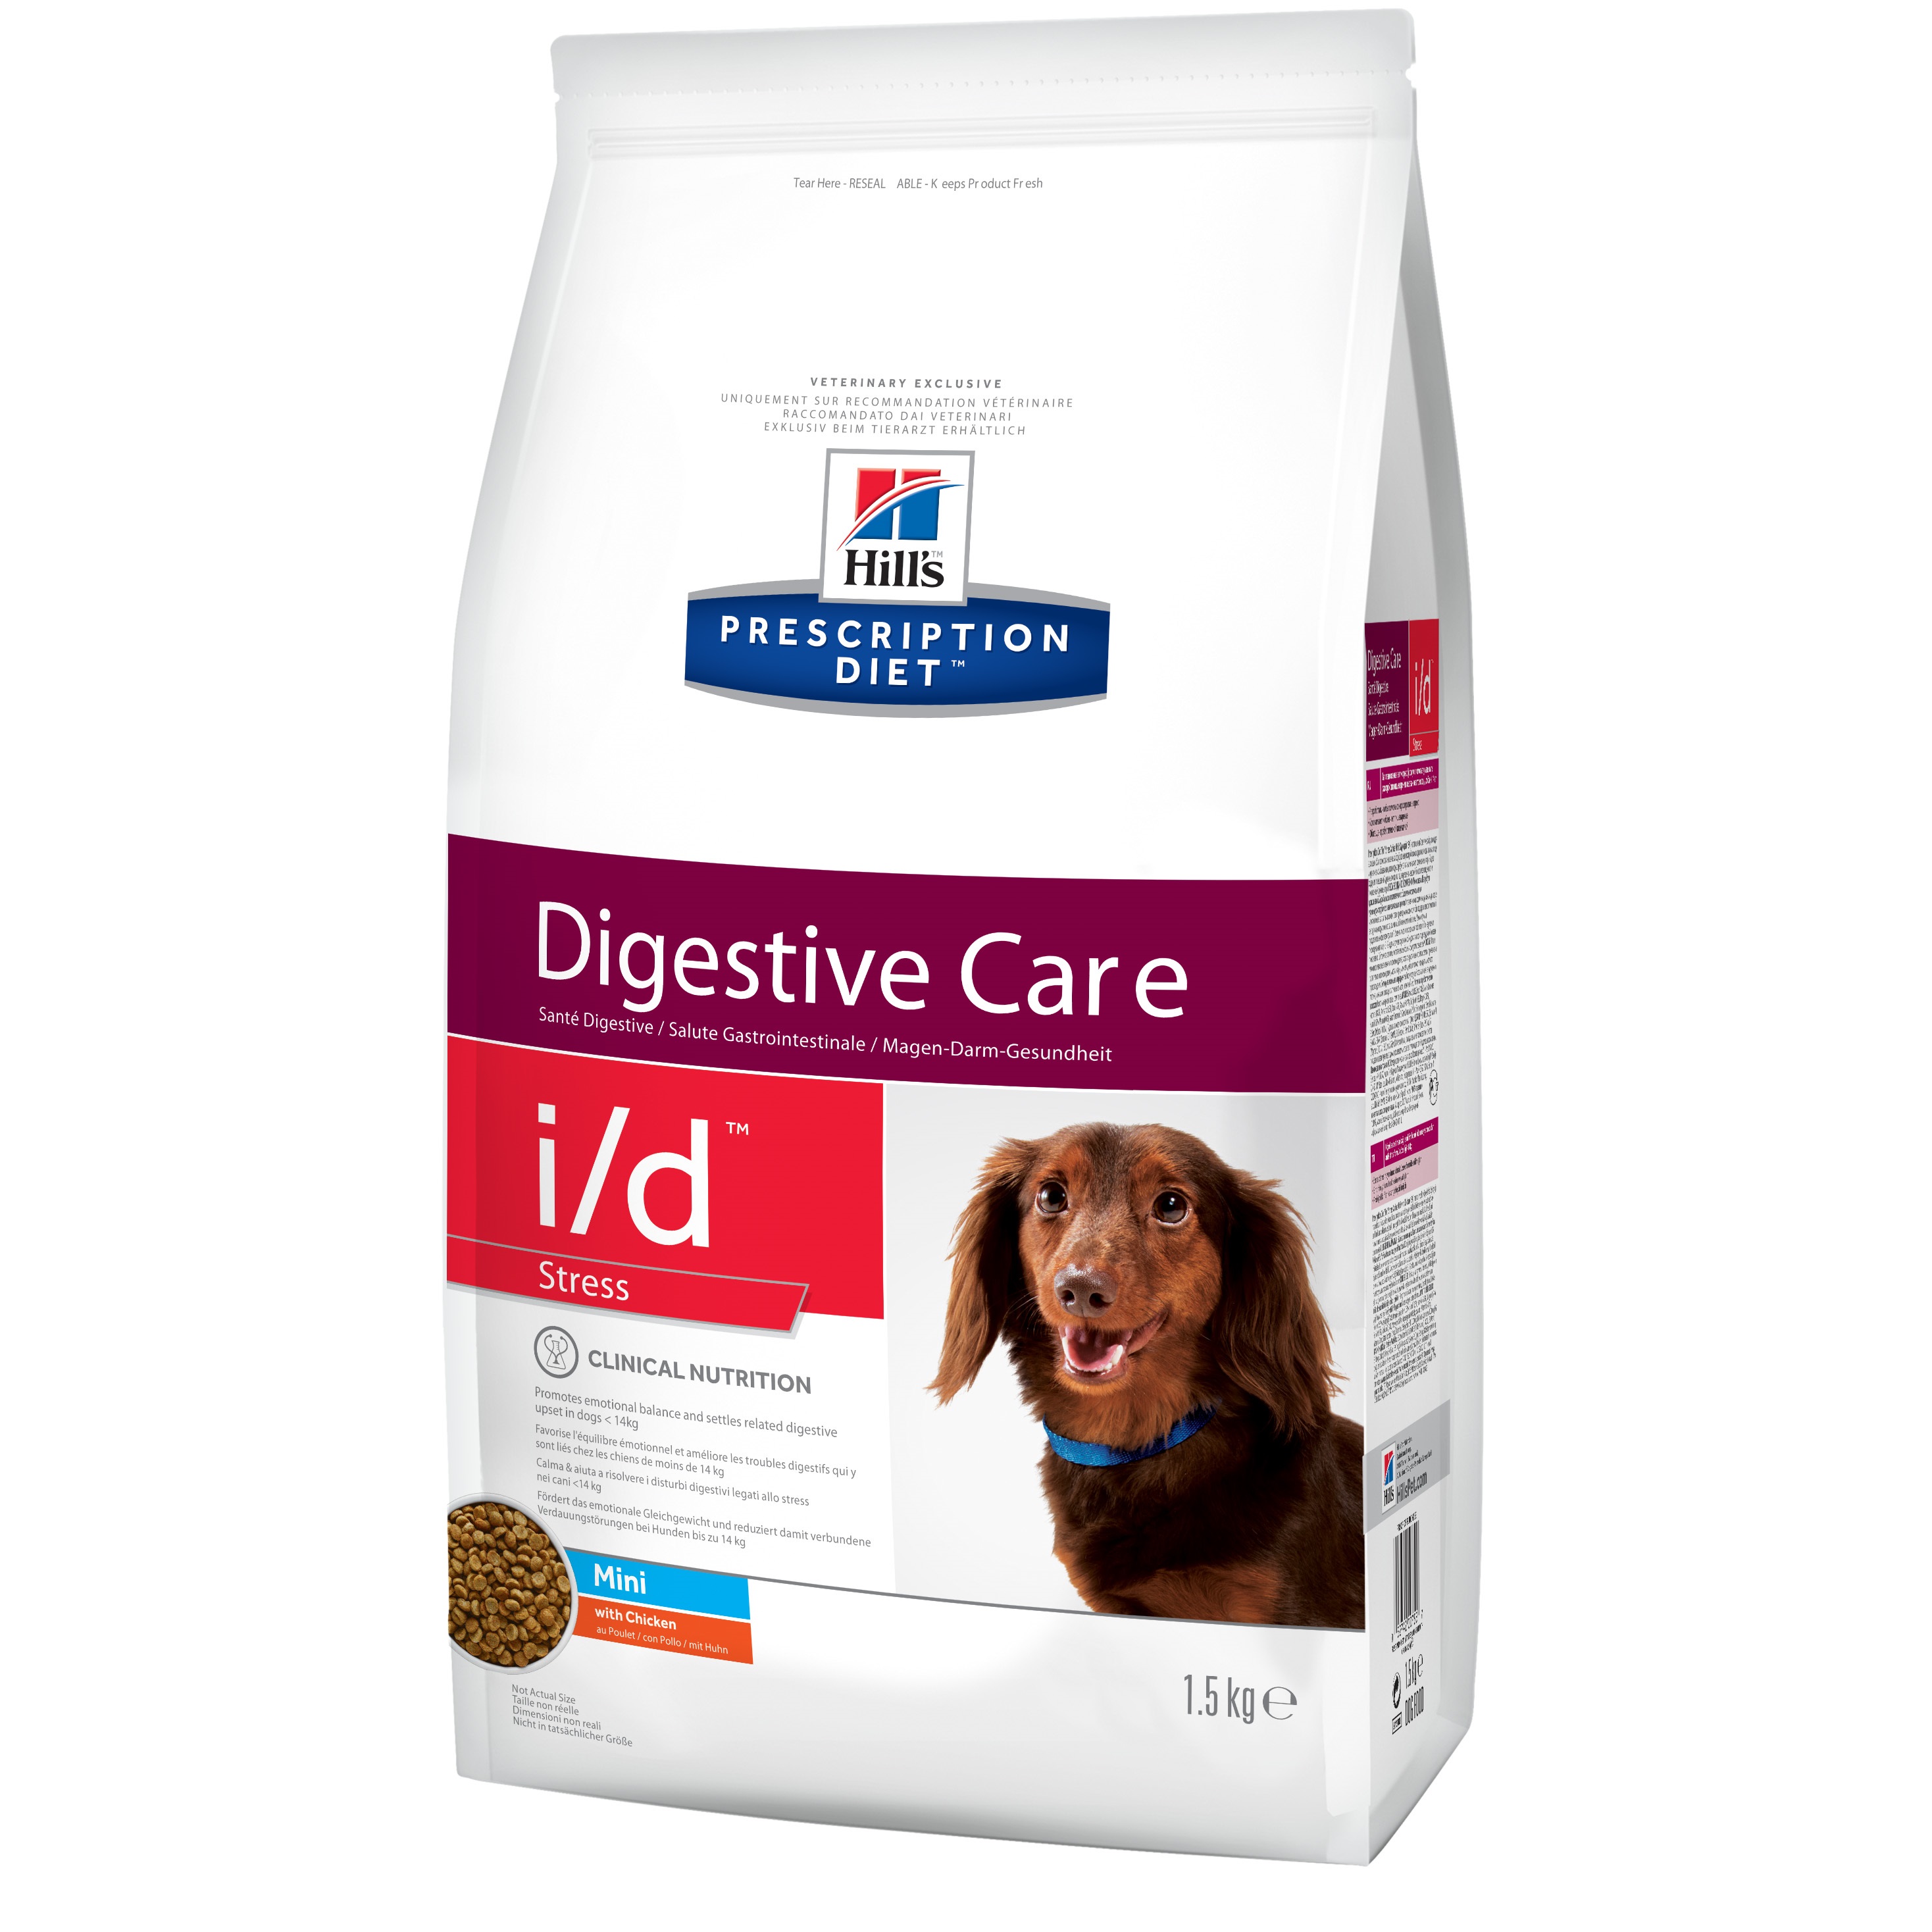 Корм собаки хилс. Hills Digestive Care i/d для собак. Hill's Prescription Diet для собак. Сухой корм для собак Hill's Prescription Diet Digestive Care i/d stress Mini, курица,1,5кг. Хиллс гастроинтестинал для собак мелких пород.